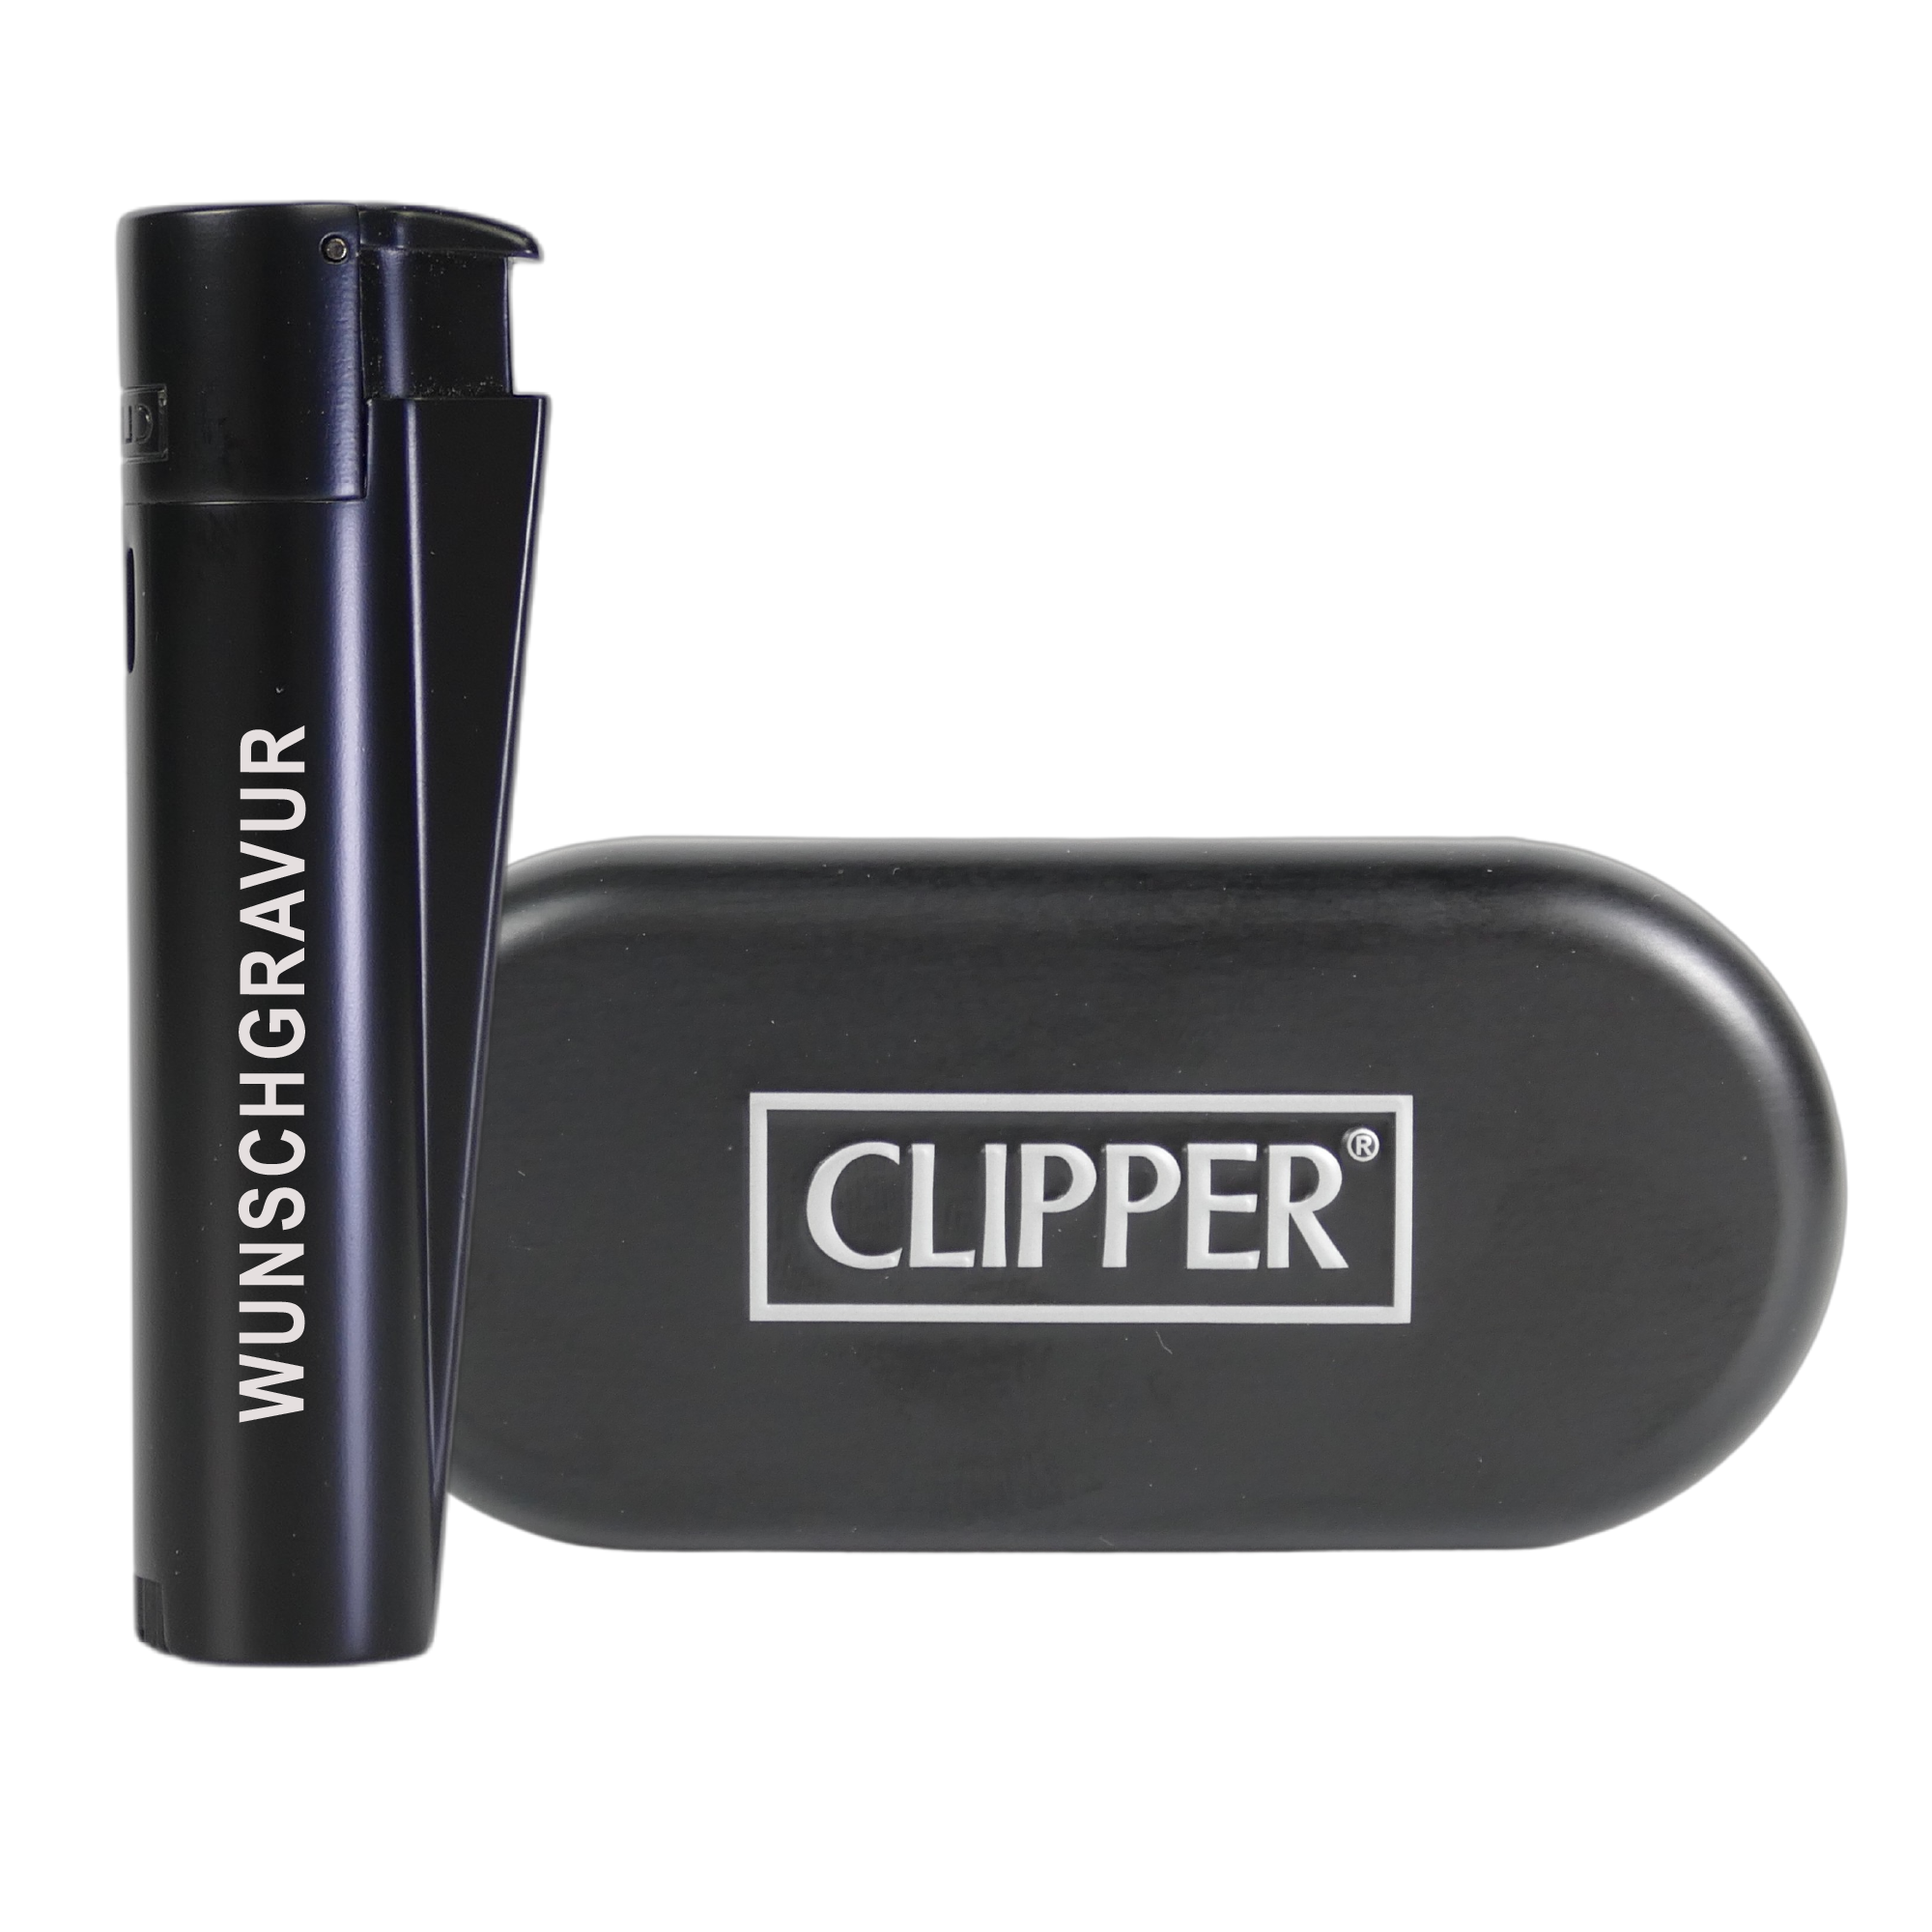 Clipper Personalisiert Schwarz - Wiens3d